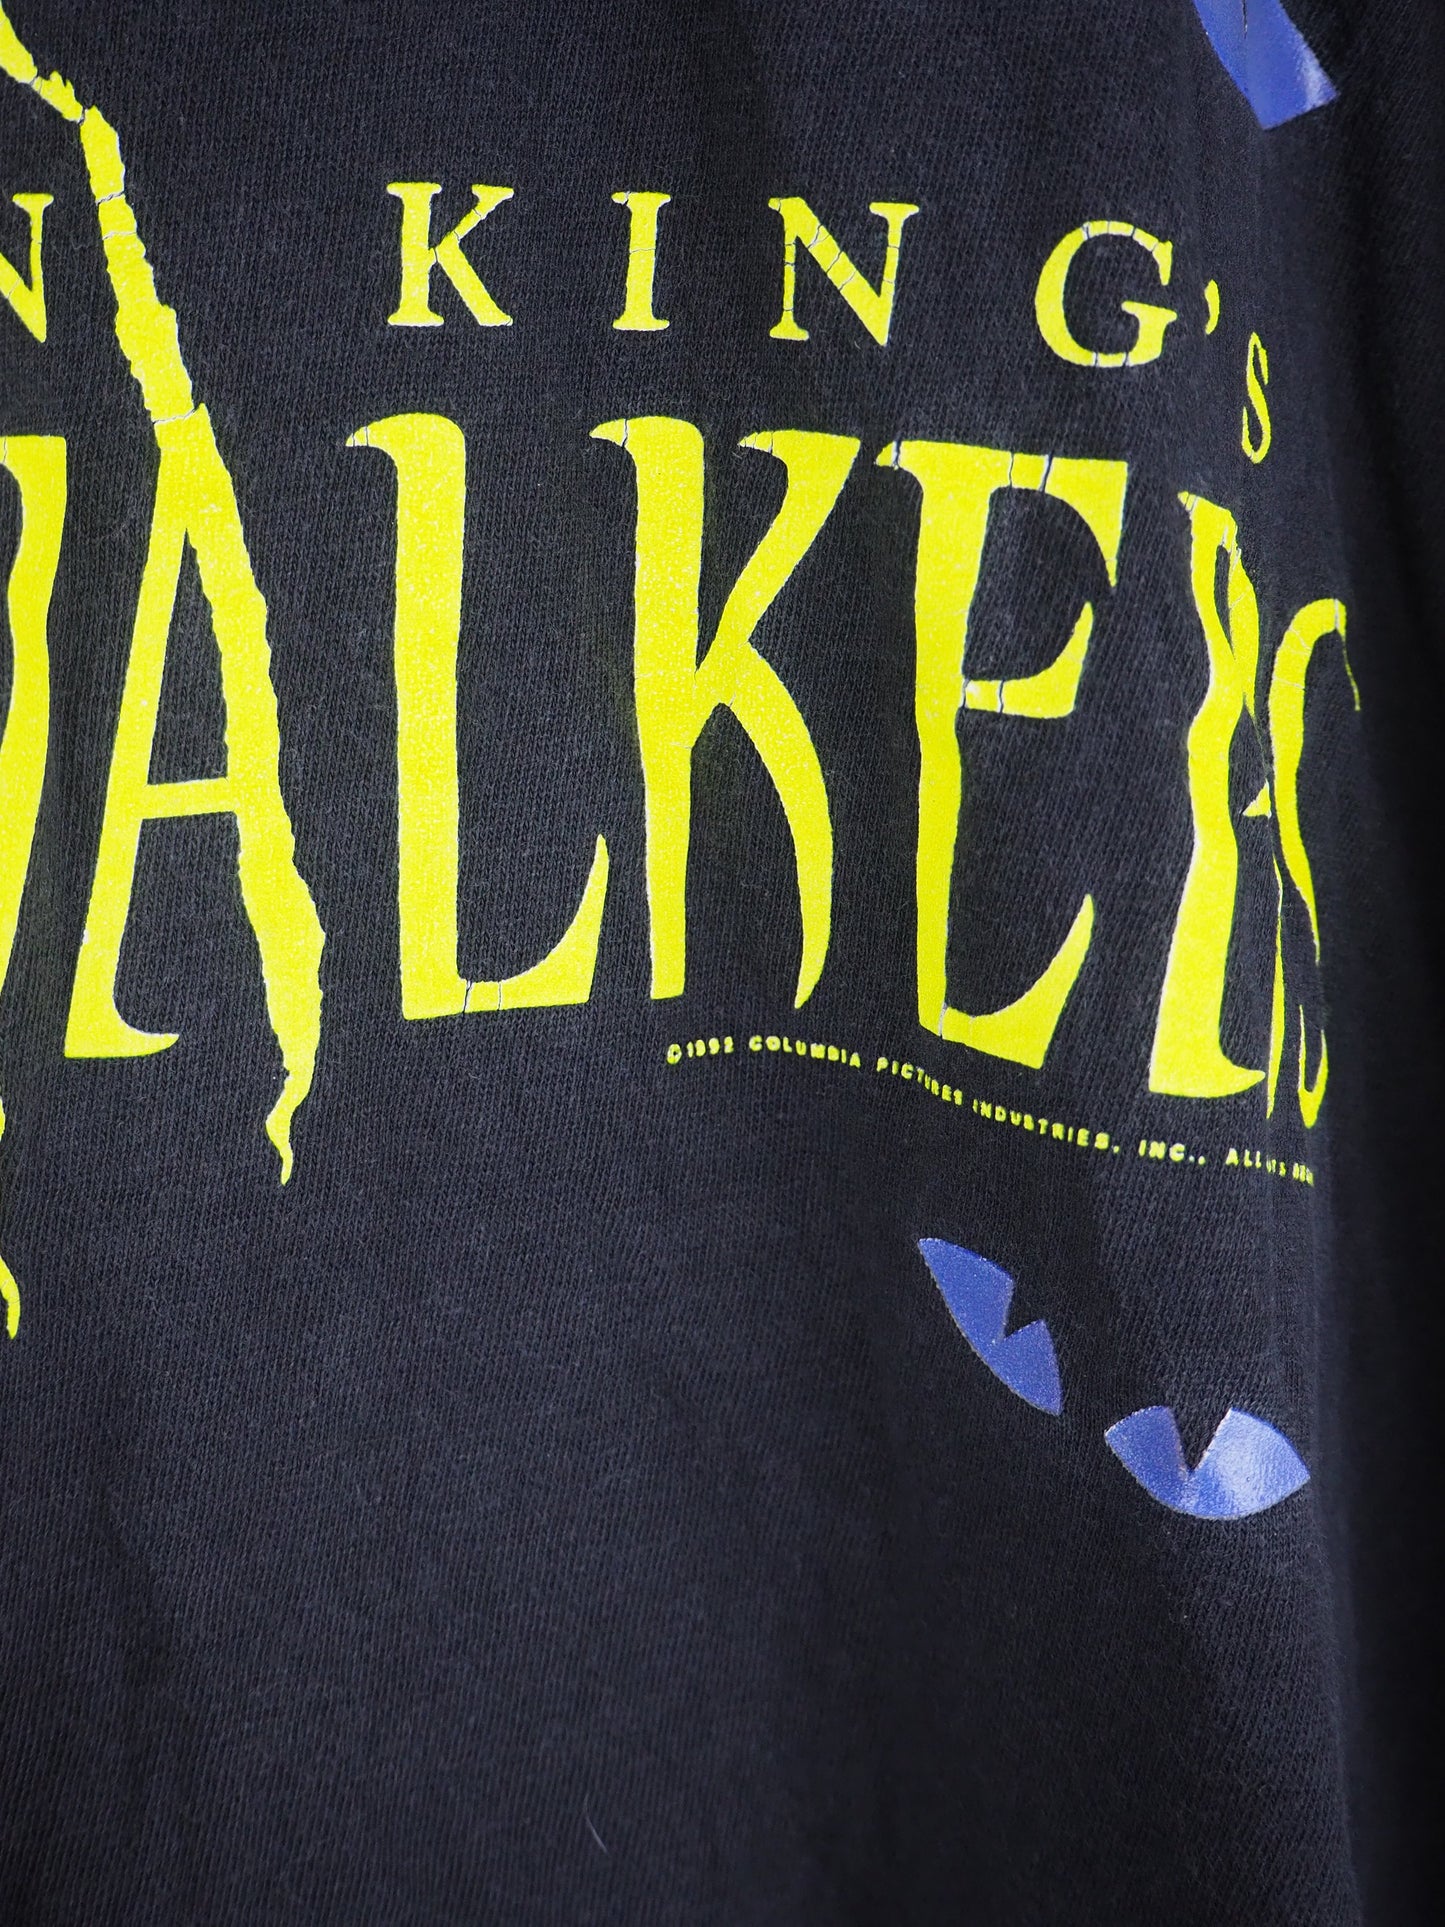 Vintage Stephen King's "Sleepwalkers" 1992 t-shirt - size XL